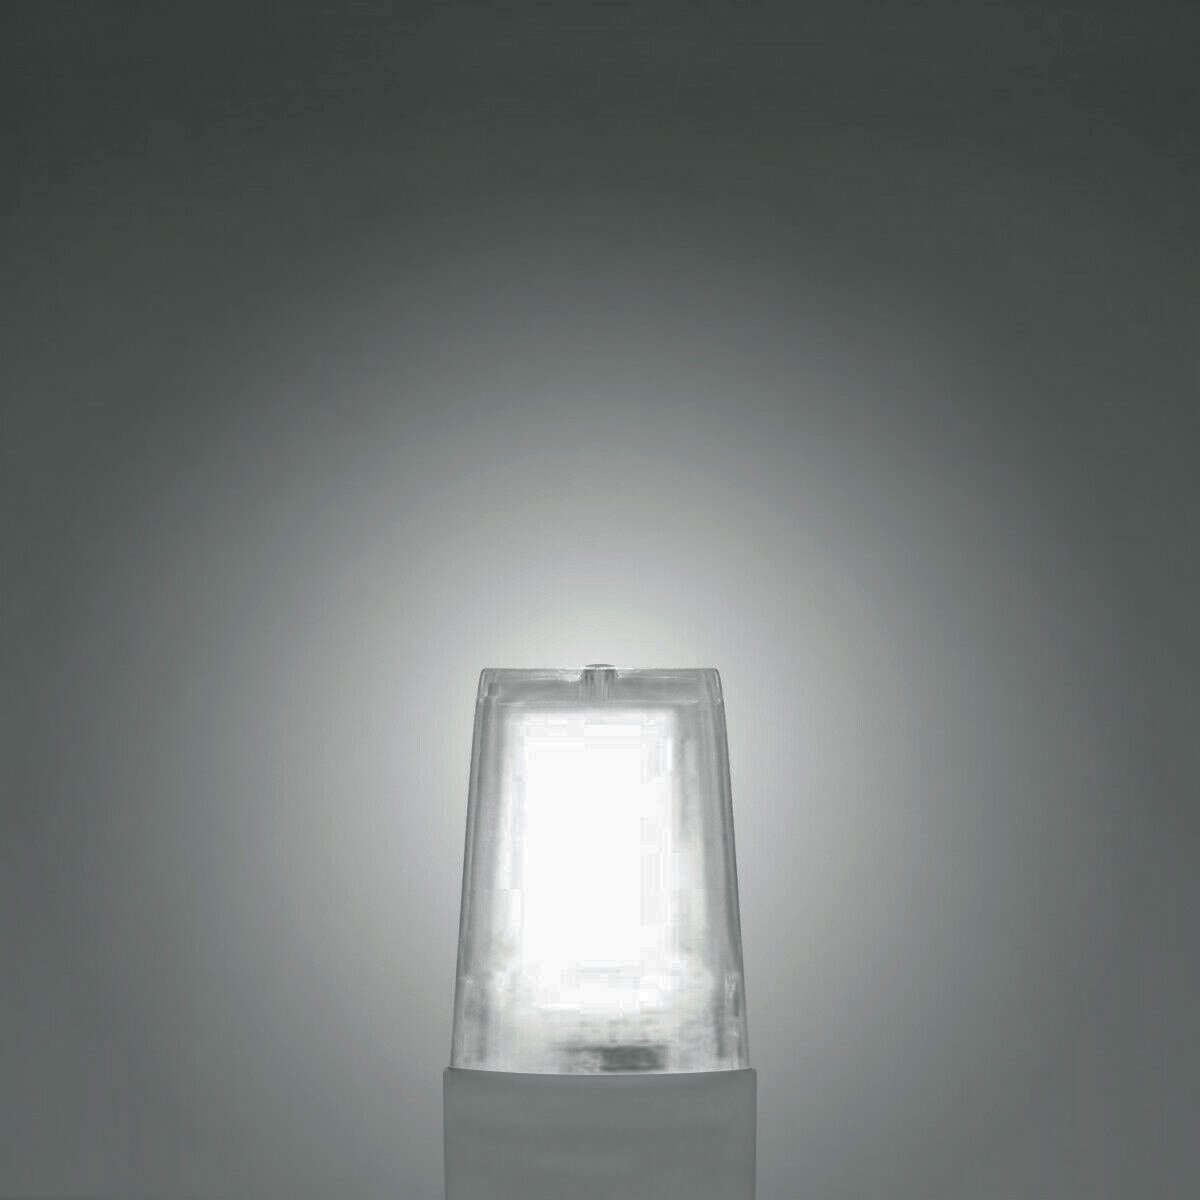 G.W.S LED Wholesale LED Bulbs G4 / Neutral White (4000K) / 1 3W G4 LED Capsule Bulb